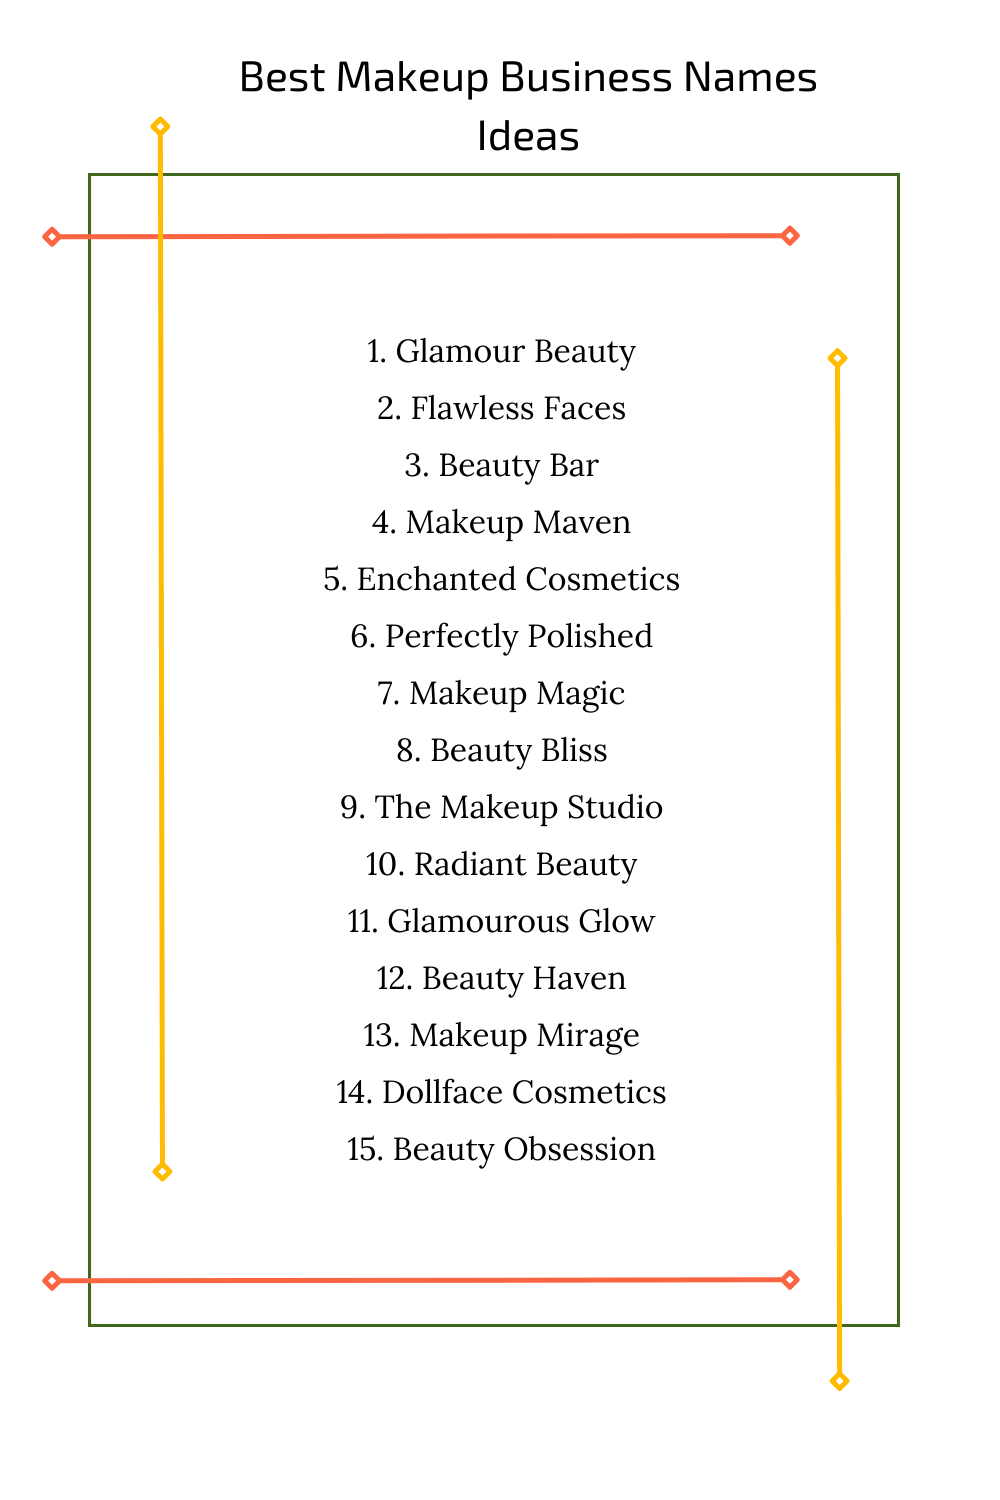 Best Makeup Business Names Ideas